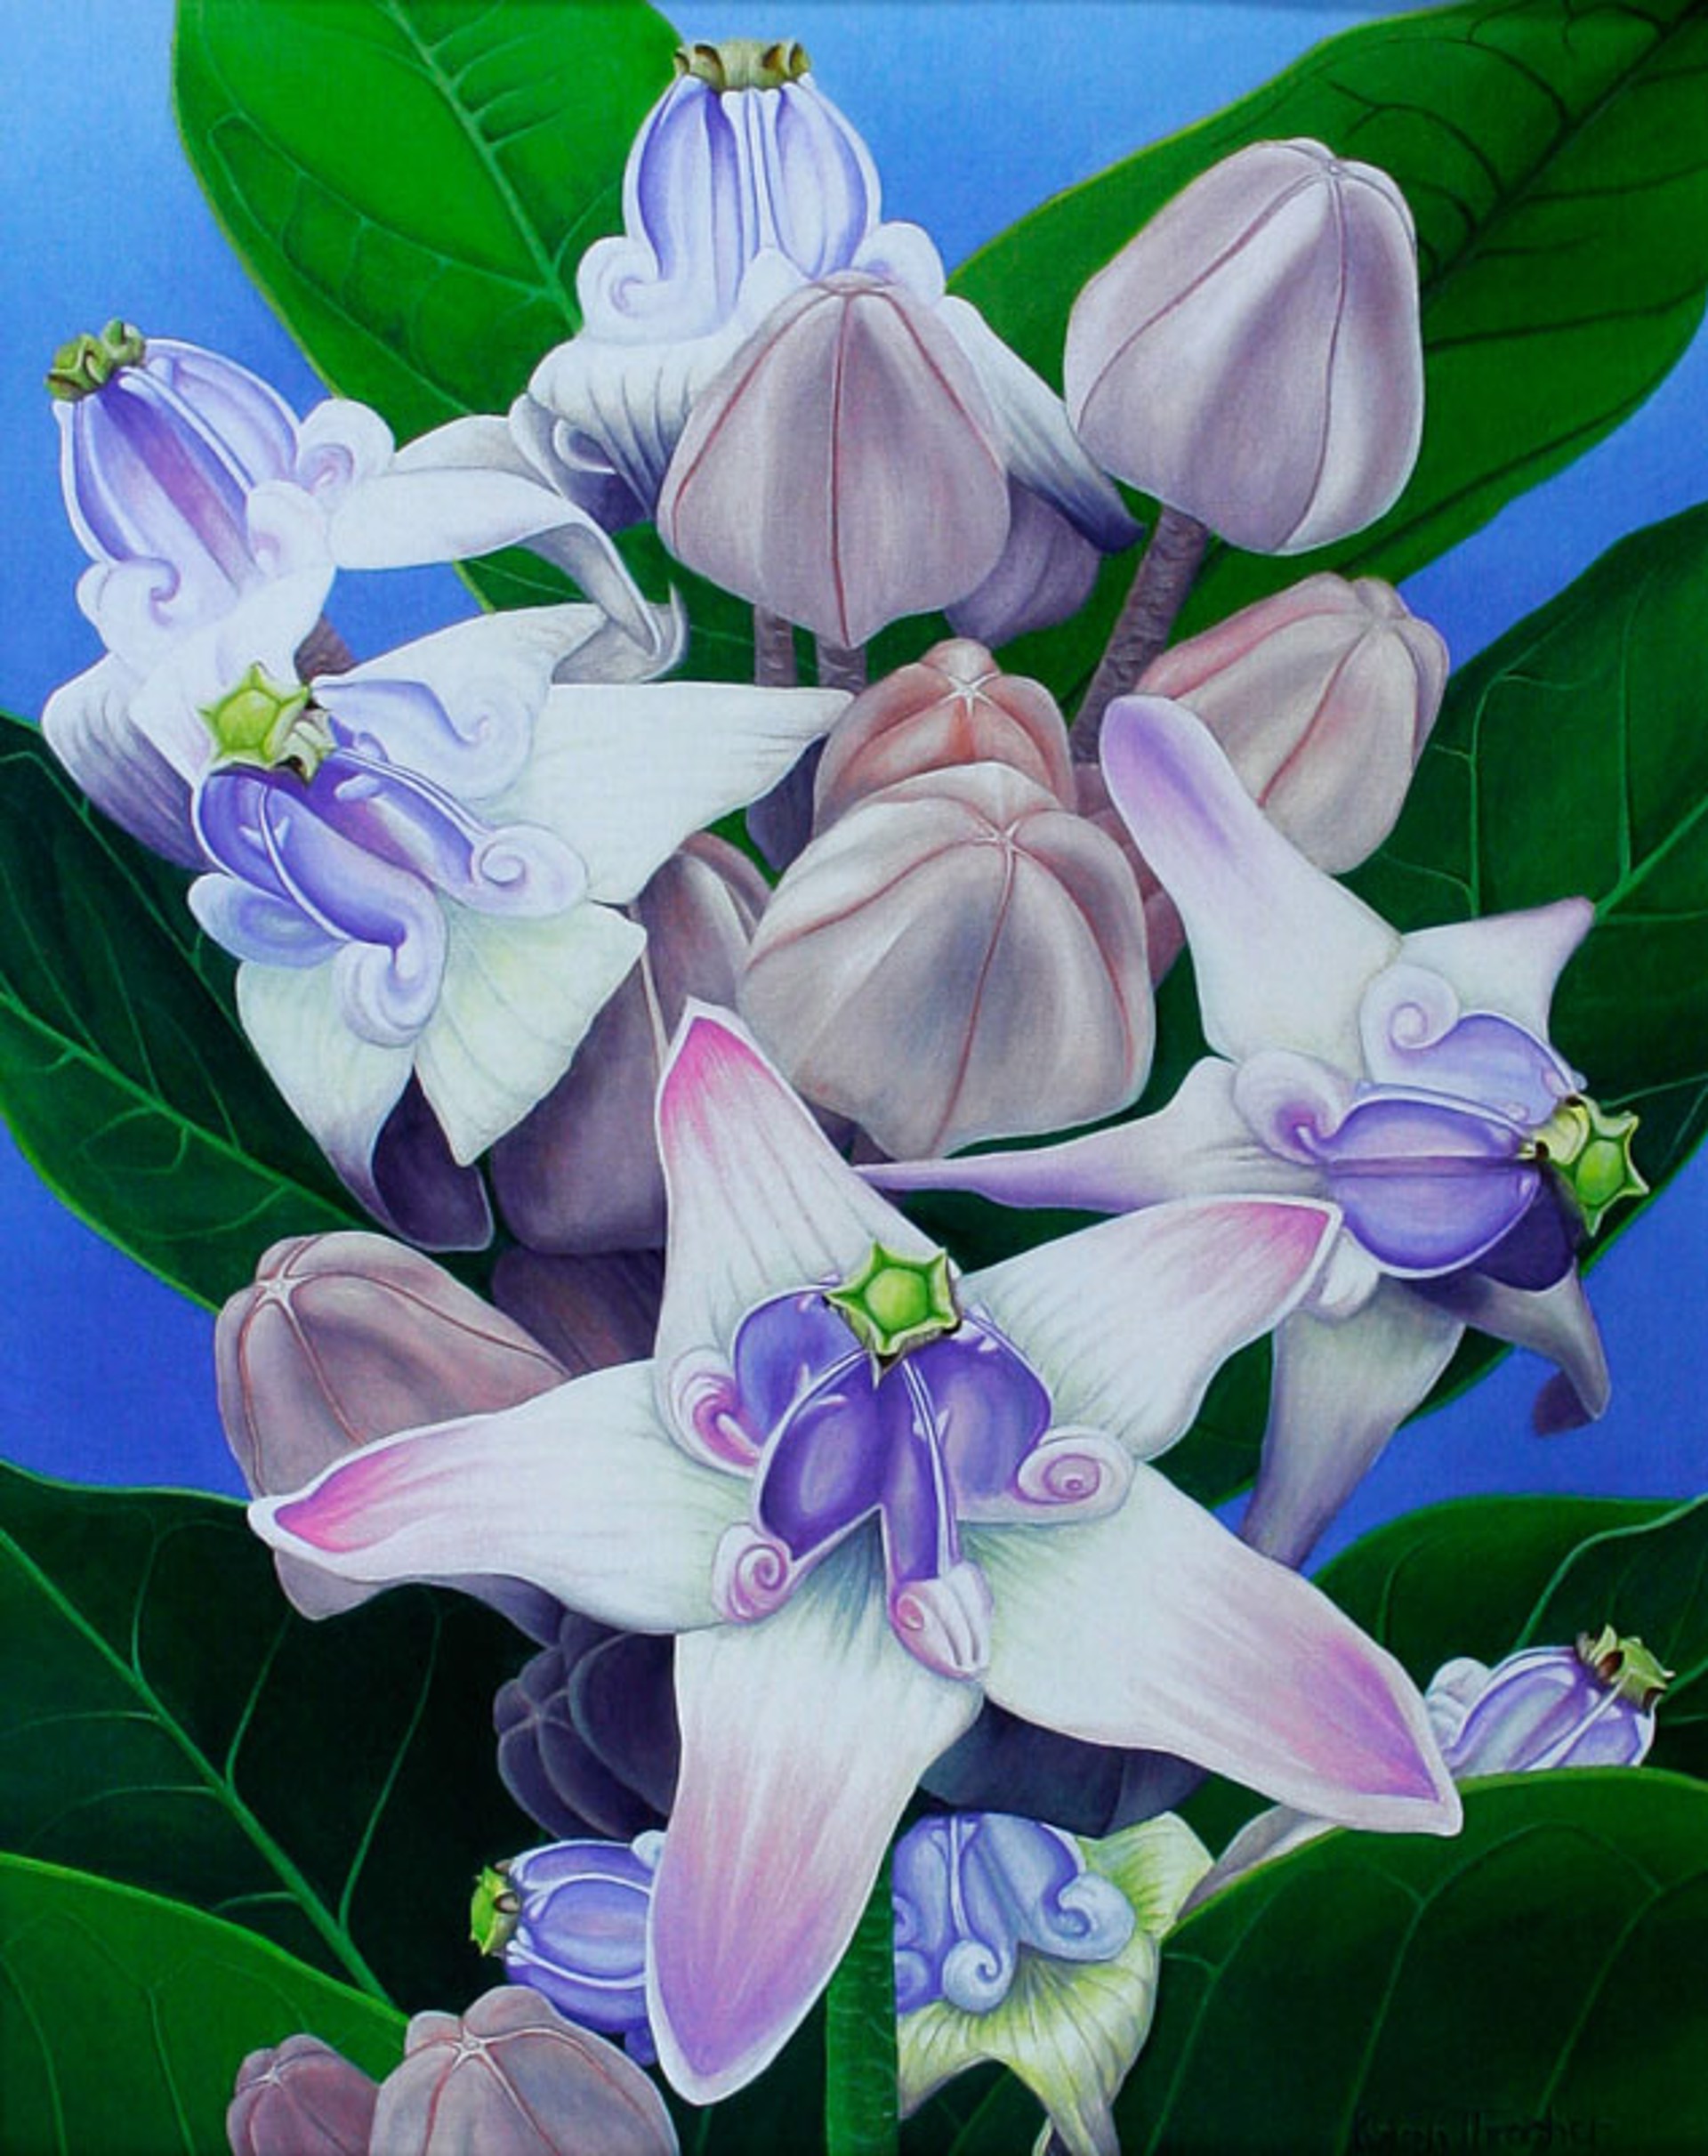 Crown Flowers by Karen Thrasher